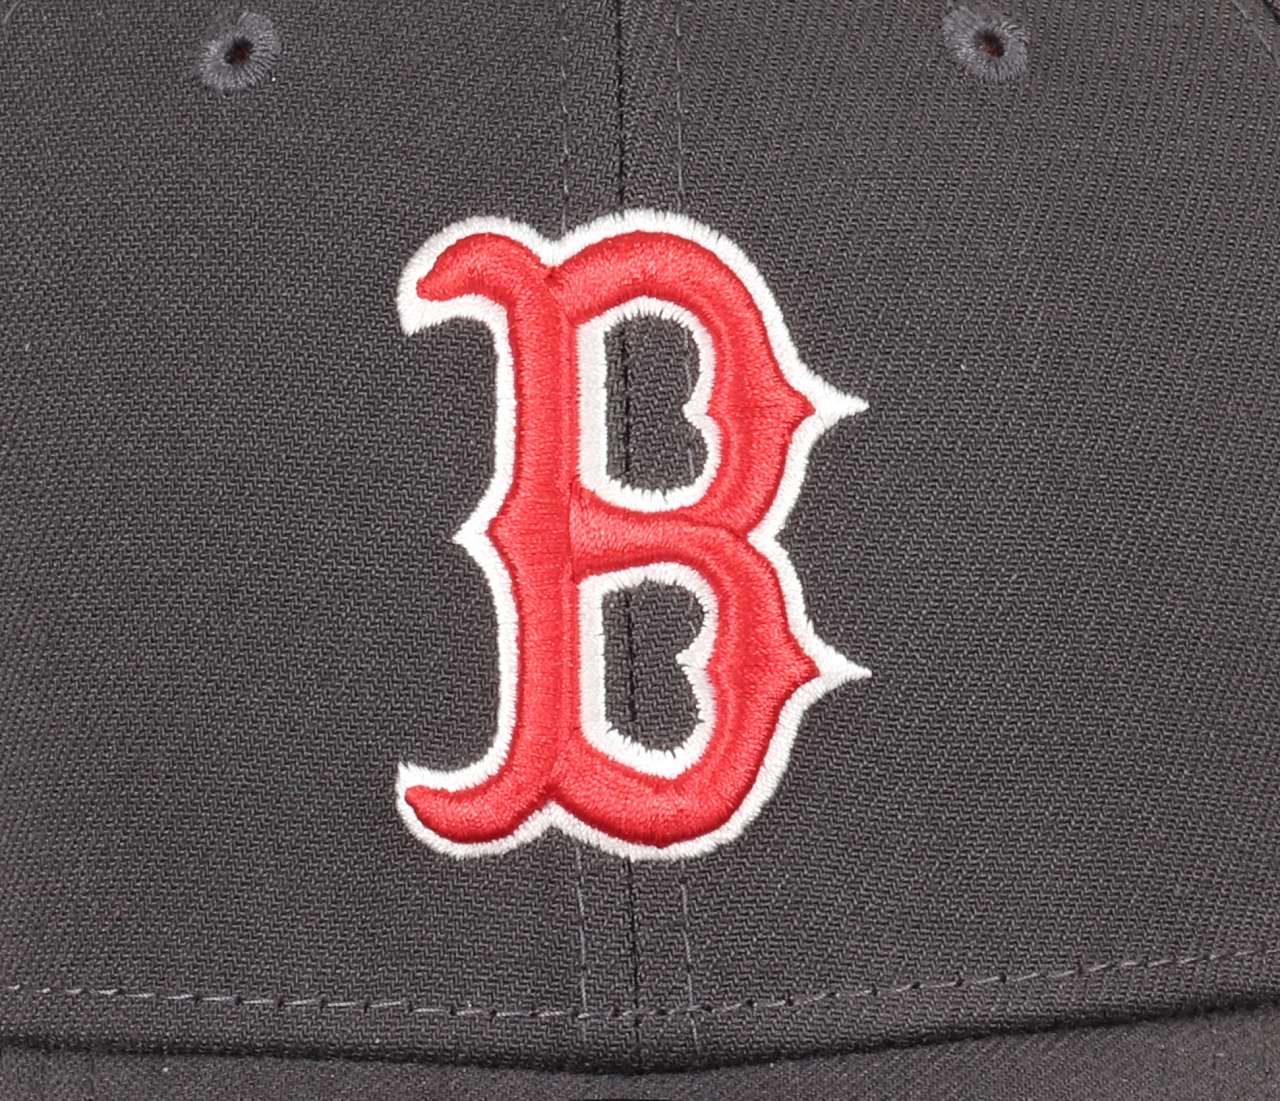 Boston Red Sox MLB Graphene 39Thirty Stretch Cap New Era